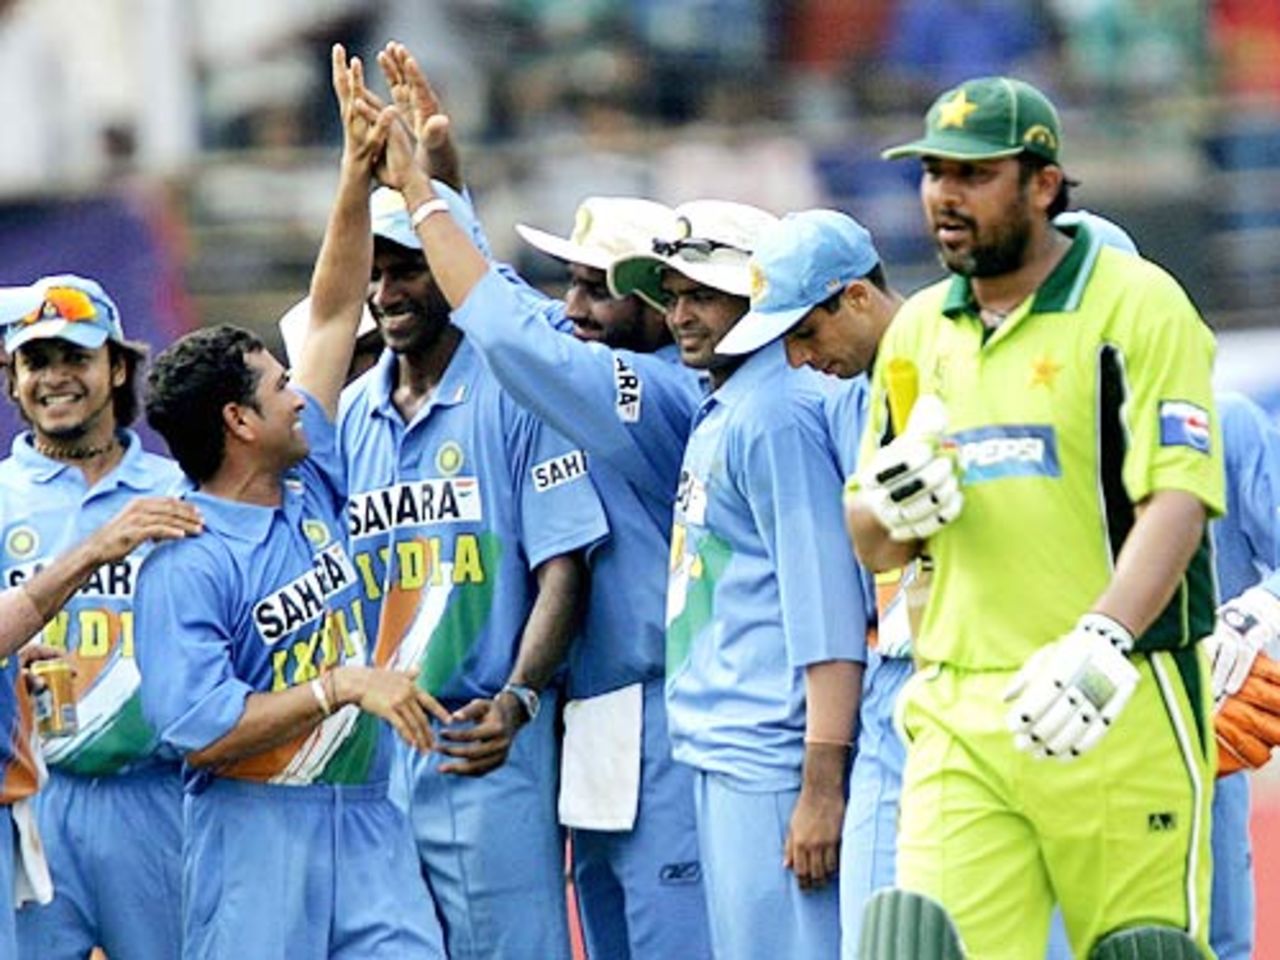 Sachin Tendulkar failed with the bat, but clicked with the ball. Inzamam-ul-Haq was the first to fall to Tendulkar's golden arm, India v Pakistan, 1st ODI, Kochi, April 2, 2005